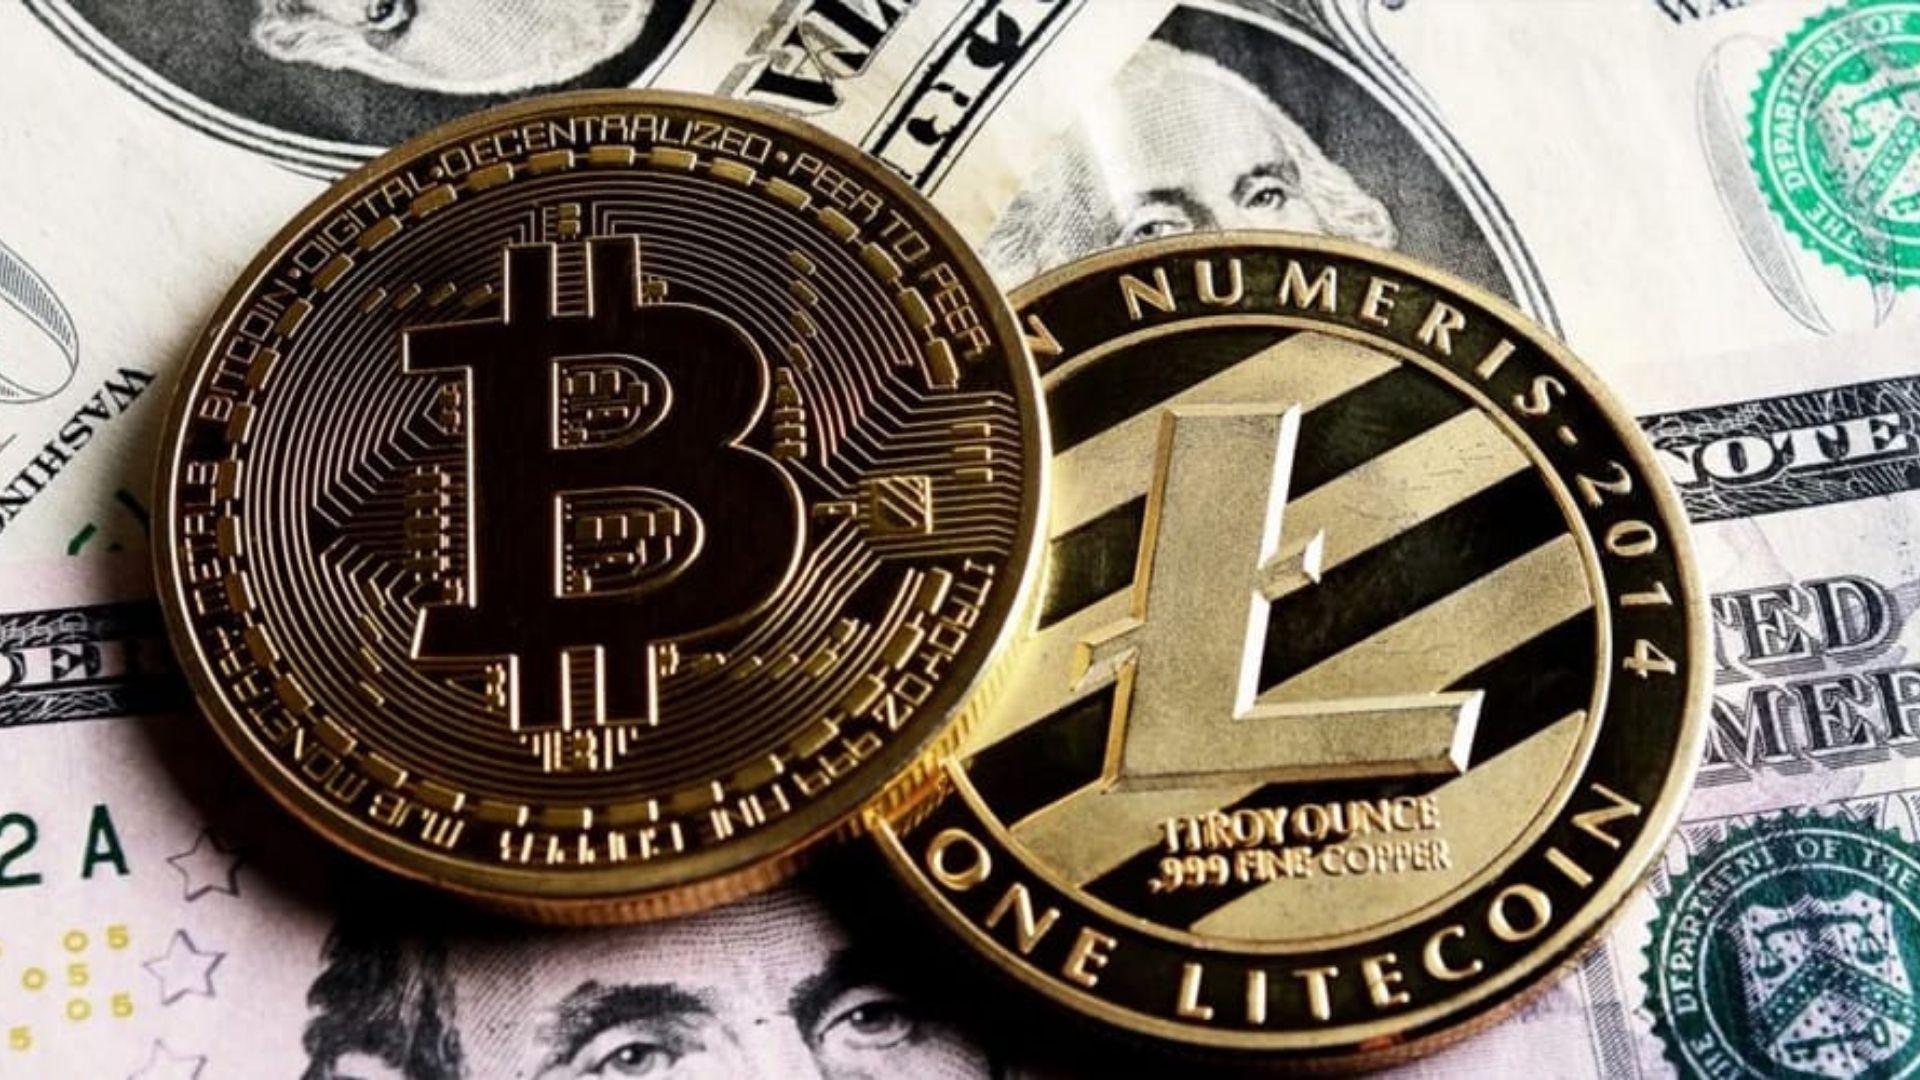 Litecoin prices plummet by 10% in a bearish market